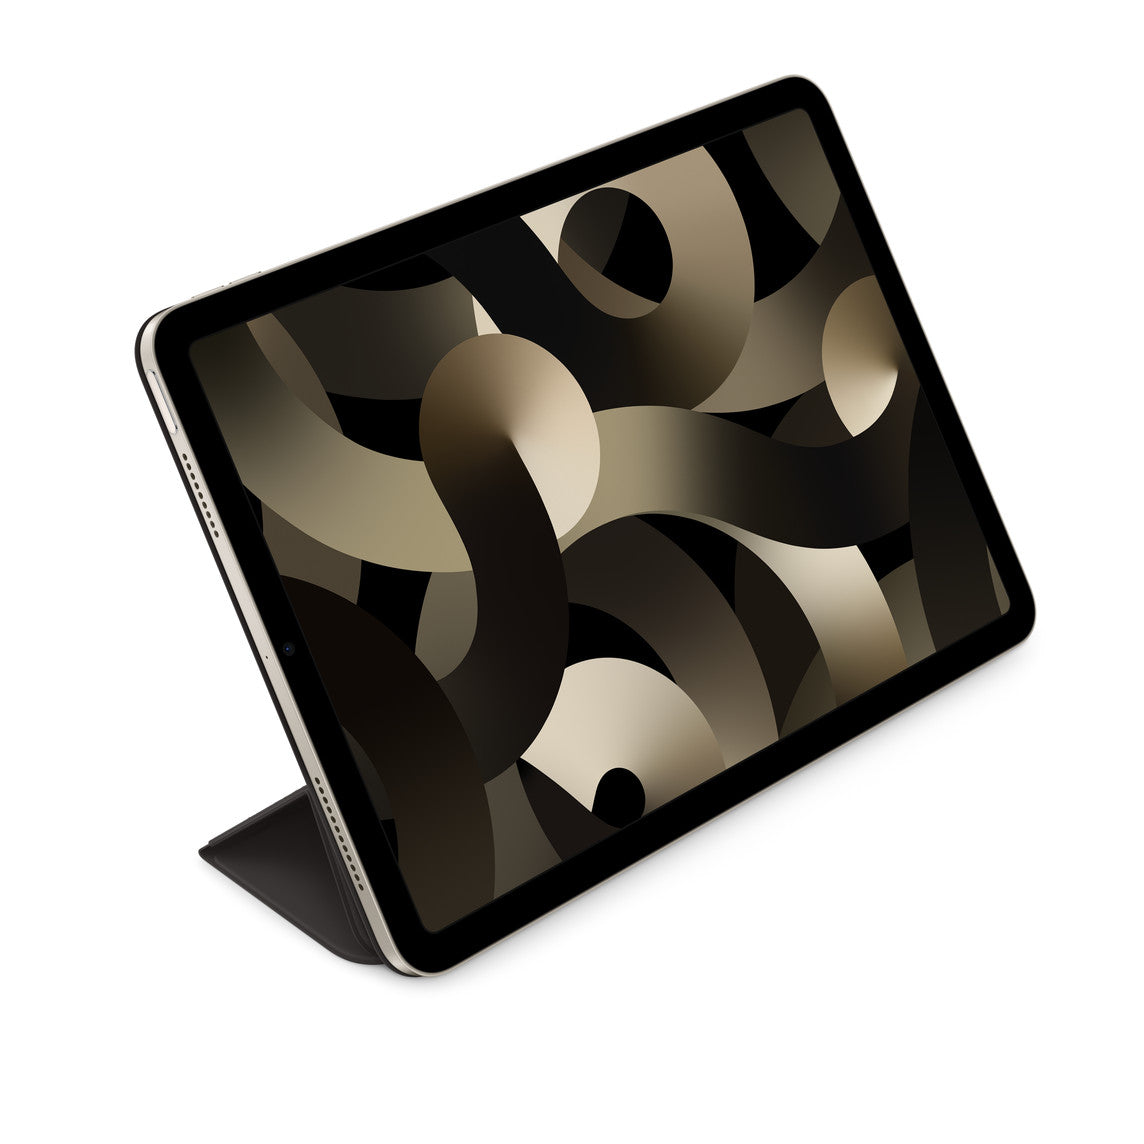 Smart Folio for iPad Air (5th generation) - Black